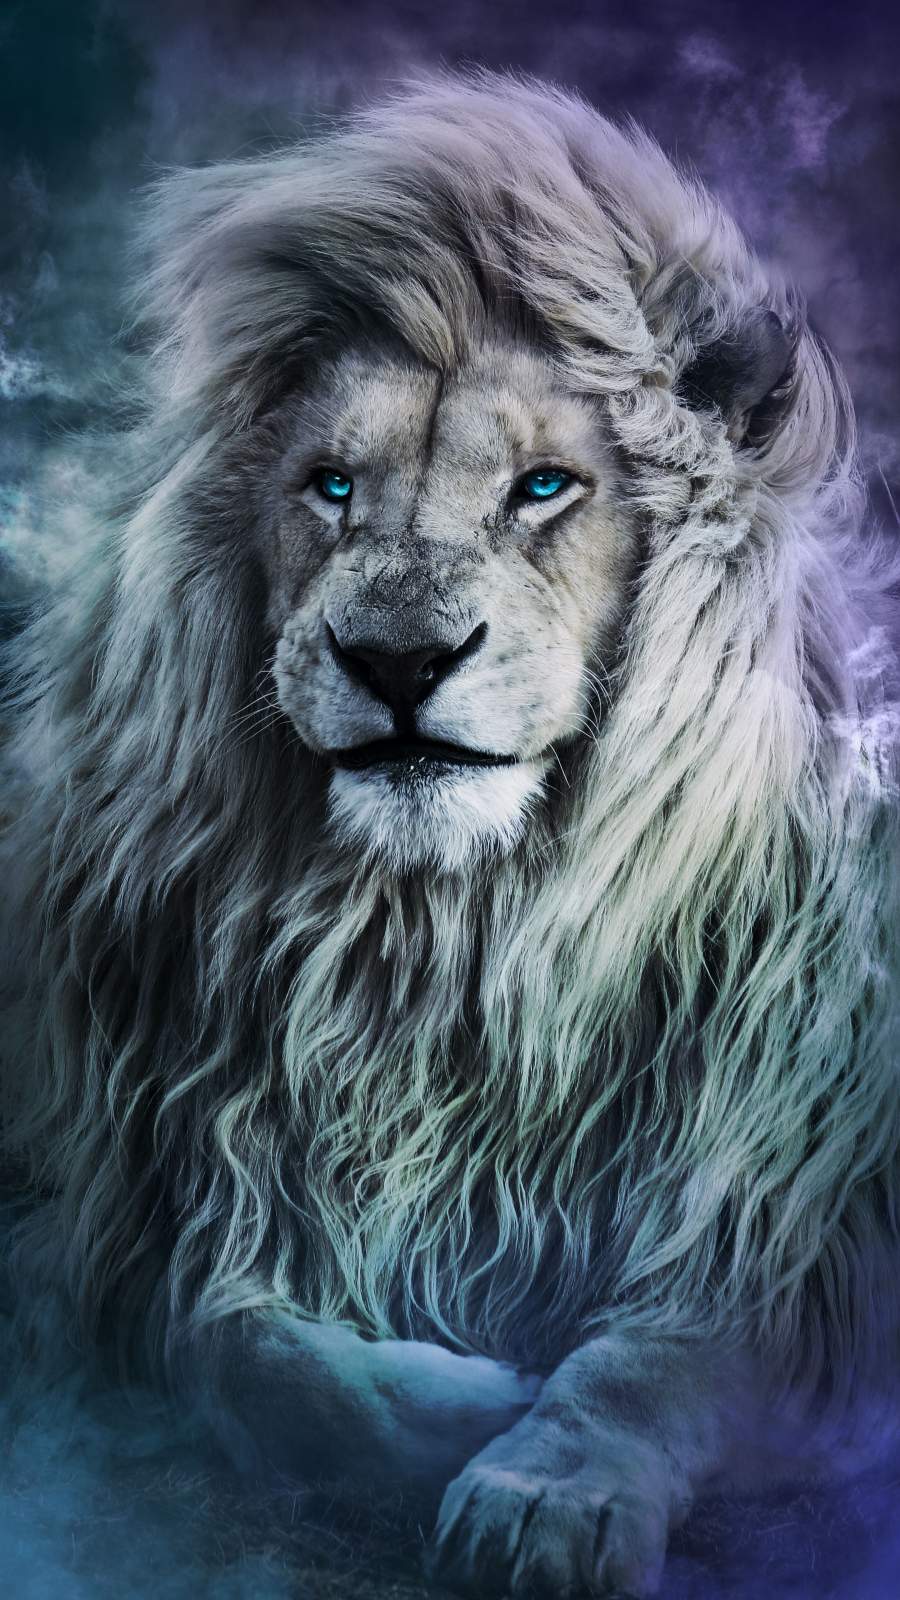 Blue Neon Lion Live Wallpaper  free download